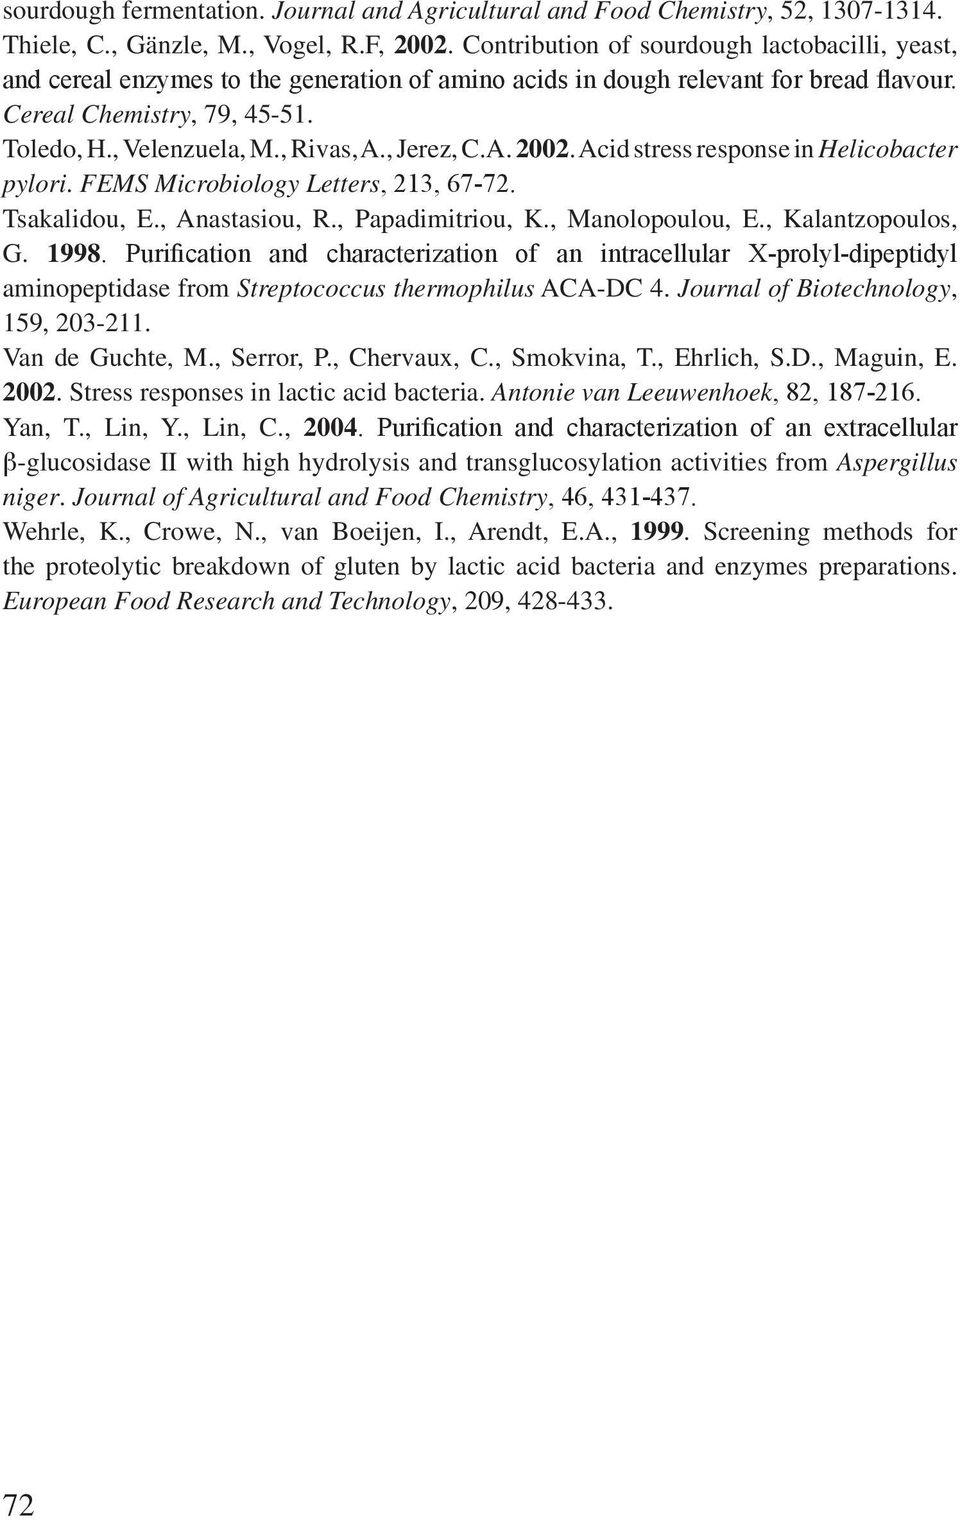 , Rivas, A., Jerez, C.A. 2002. Acid stress response in Helicobacter pylori. FEMS Microbiology Letters, 213, 67-72. Tsakalidou, E., Anastasiou, R., Papadimitriou, K., Manolopoulou, E.